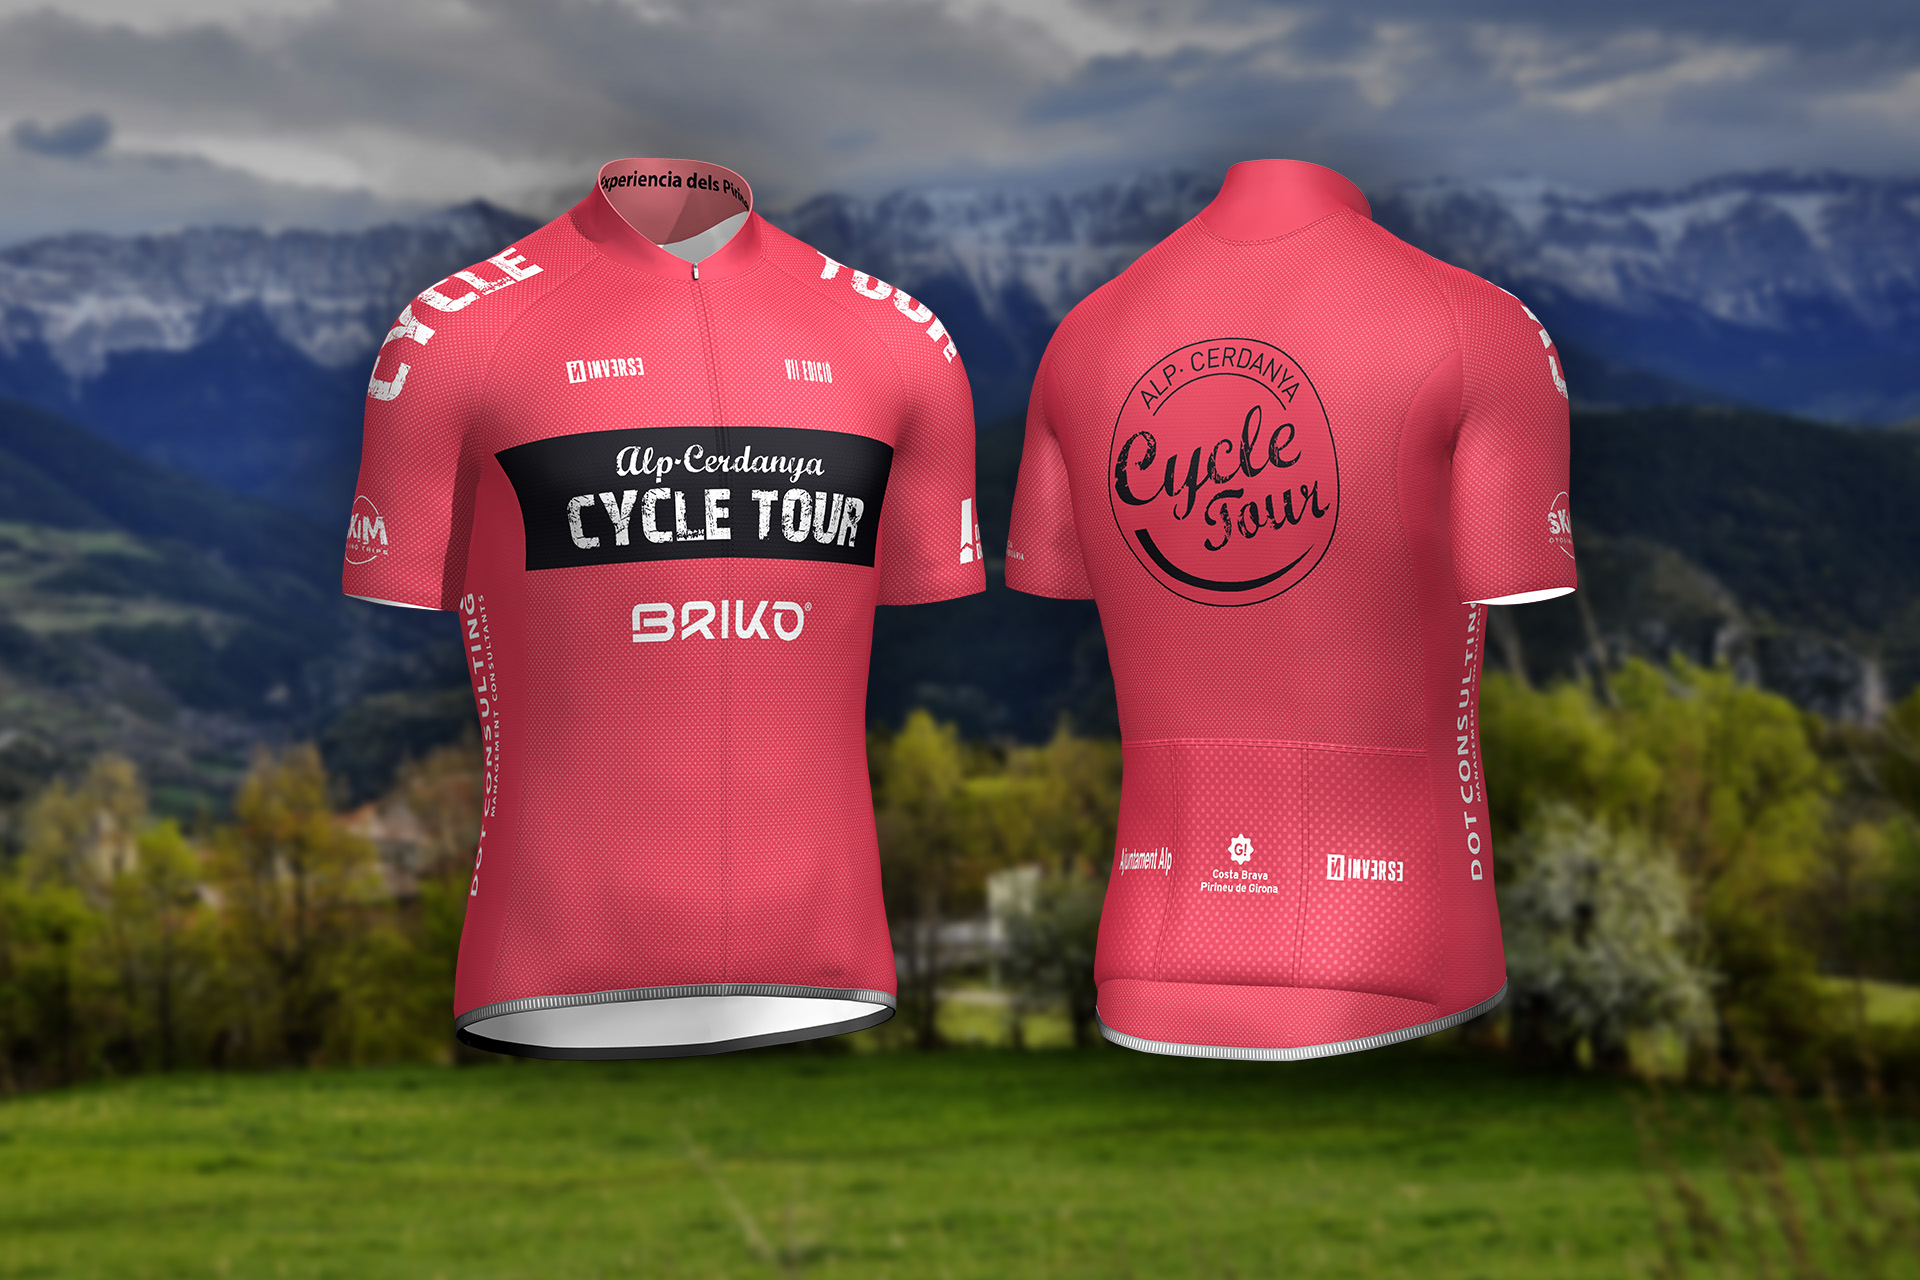 Inverse desvela el diseño del maillot la de La Alp-Cerdanya Cycle Tour 2022 | Inverseteams